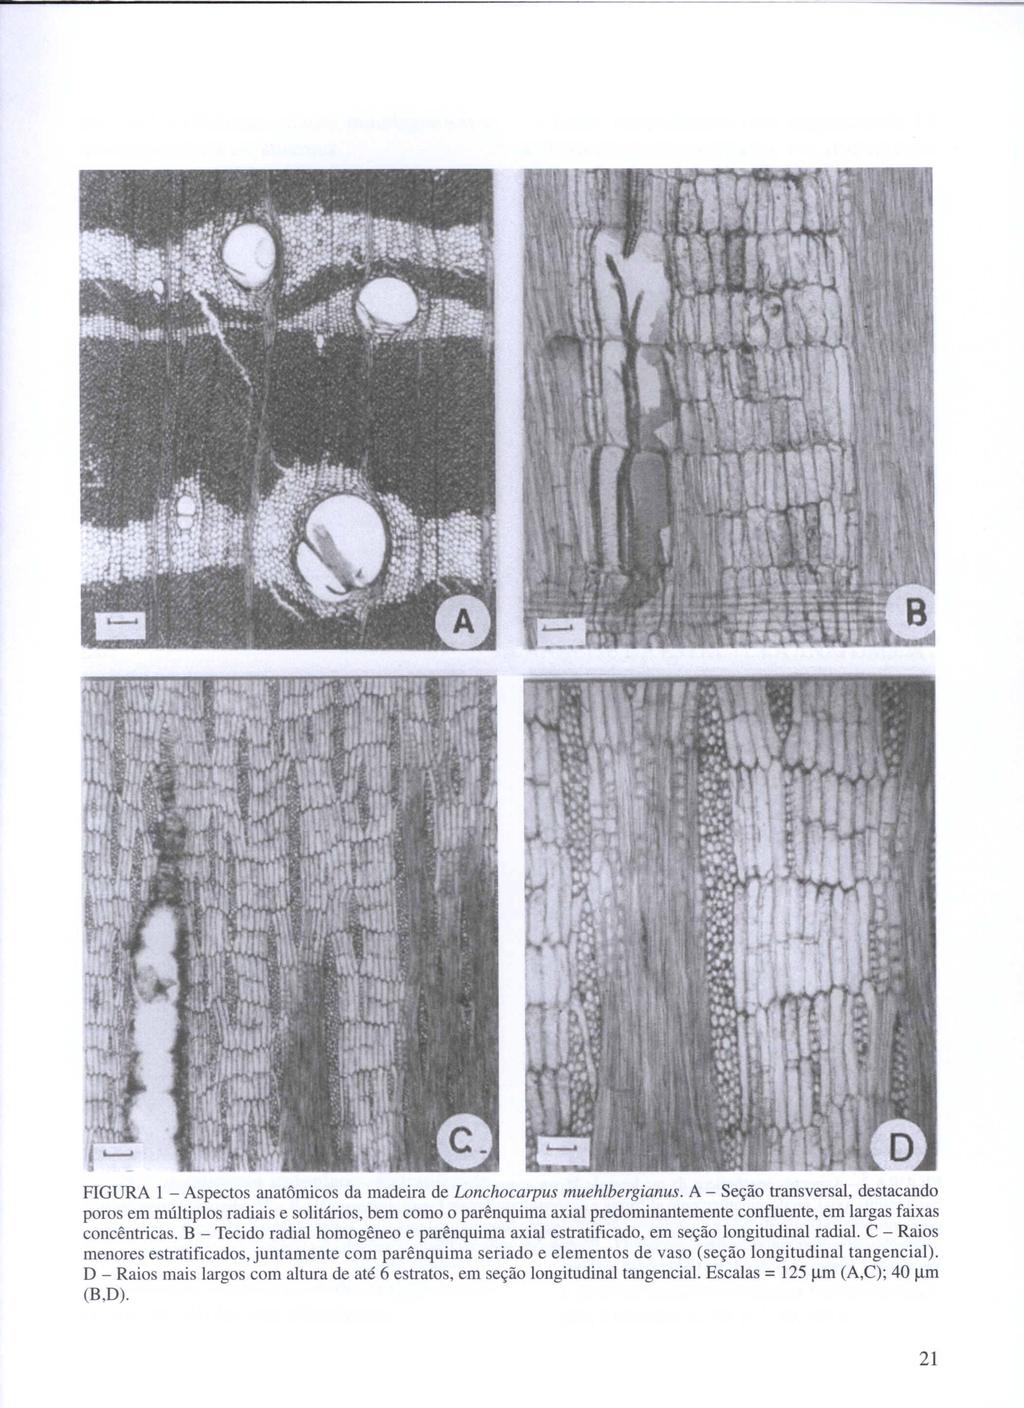 FIGURA 1 - Aspectos anatômicos da madeira de Lonchocarpus muehlbergianus.